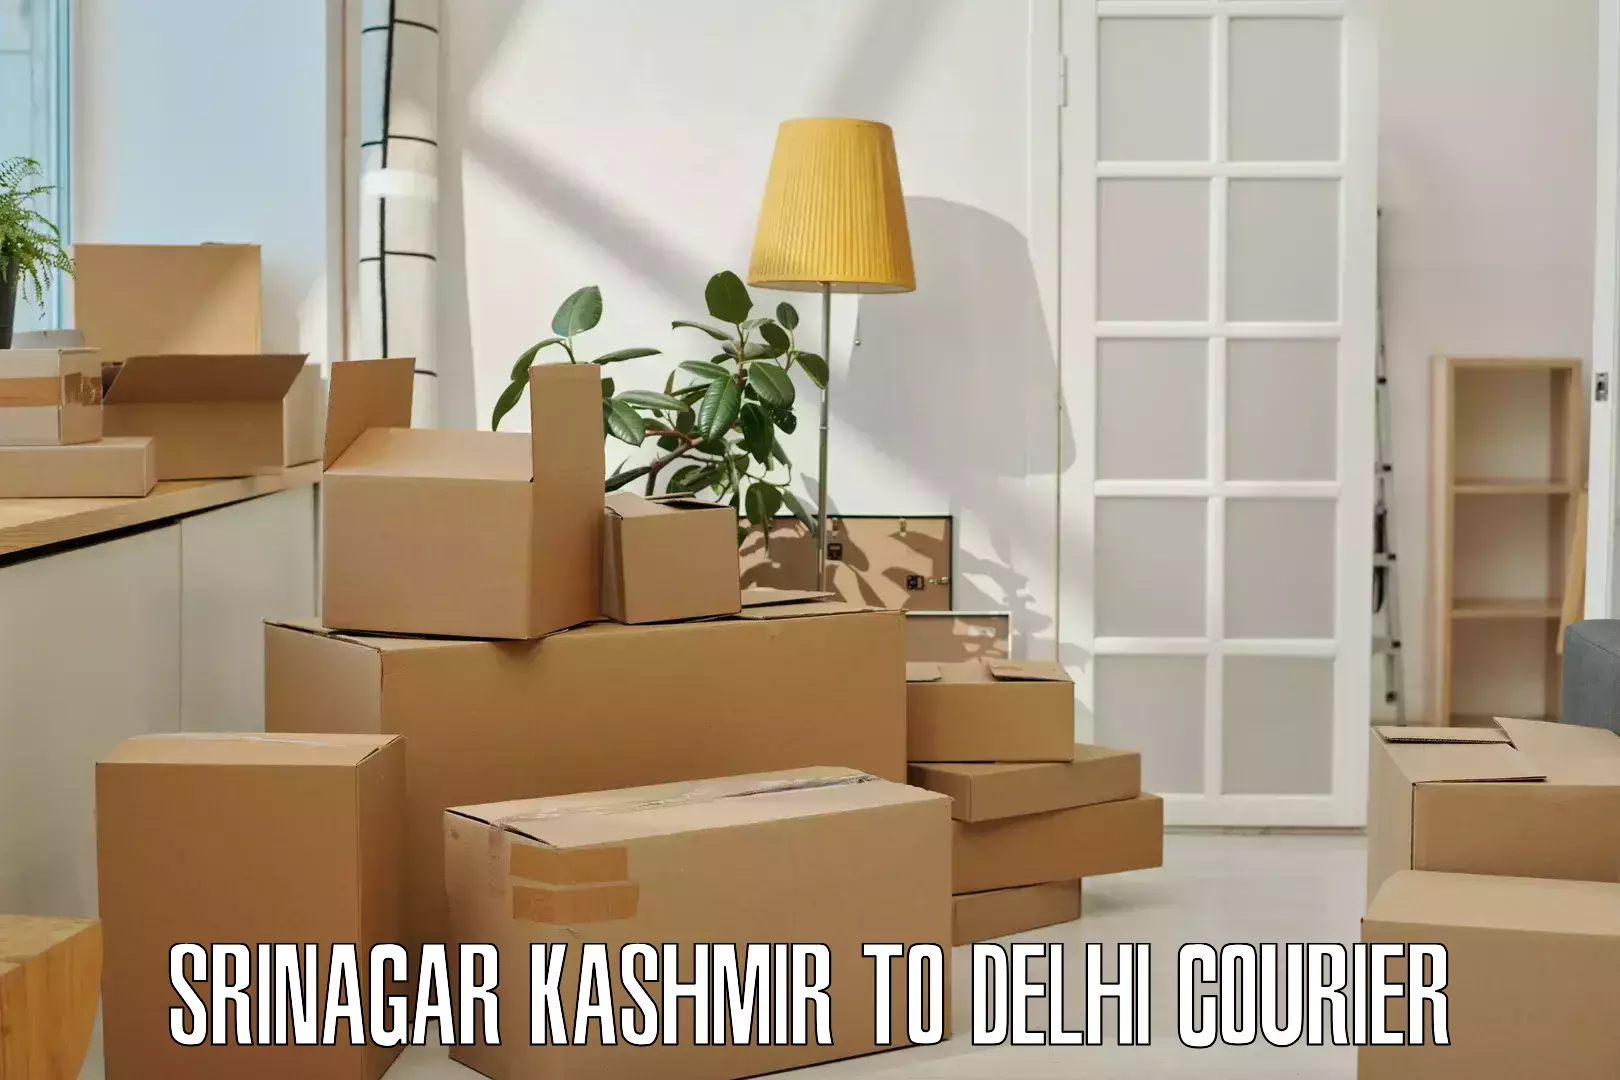 Package delivery network Srinagar Kashmir to University of Delhi